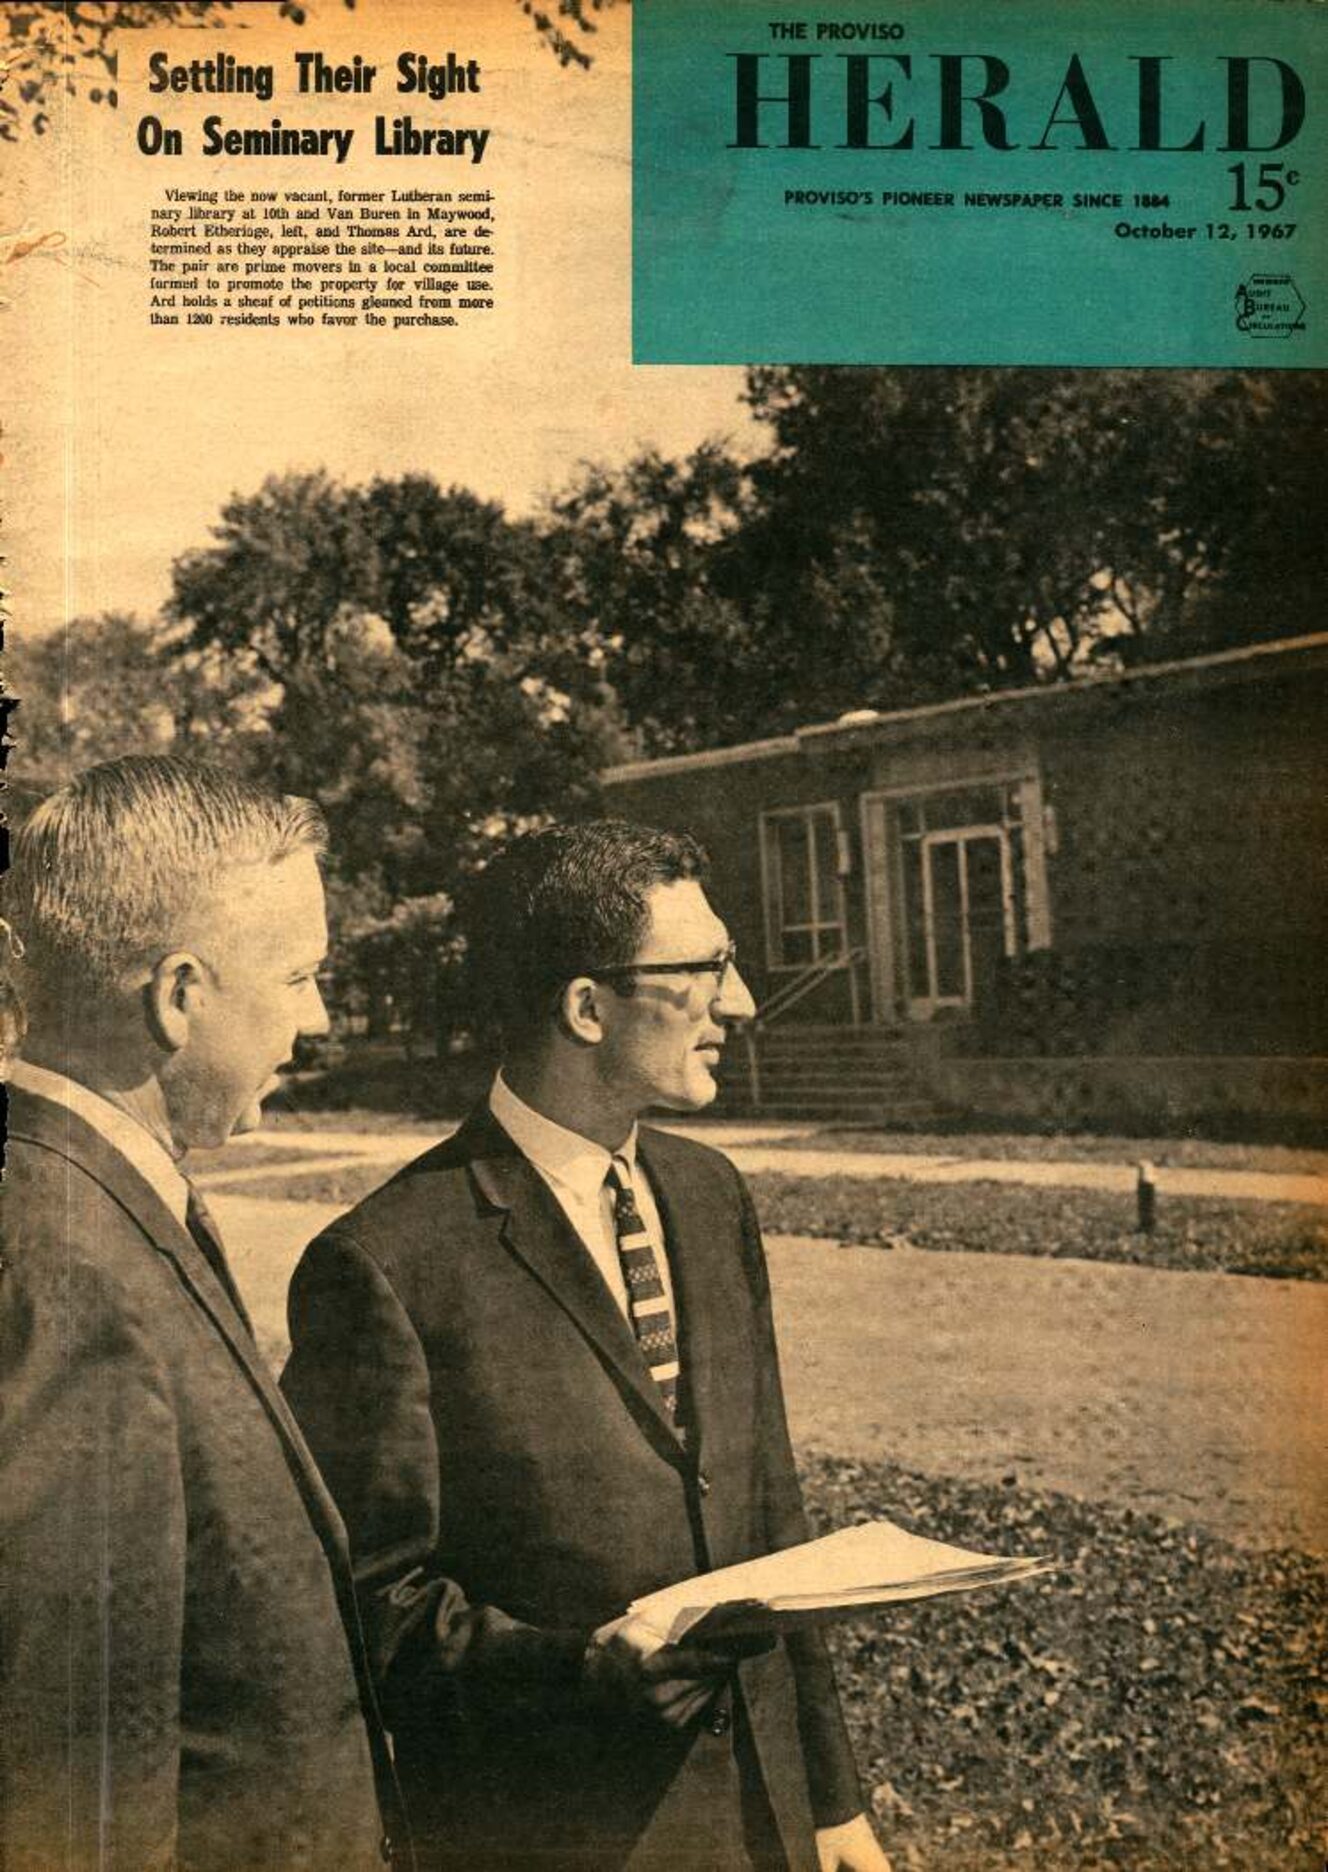 The Herald – 19671012